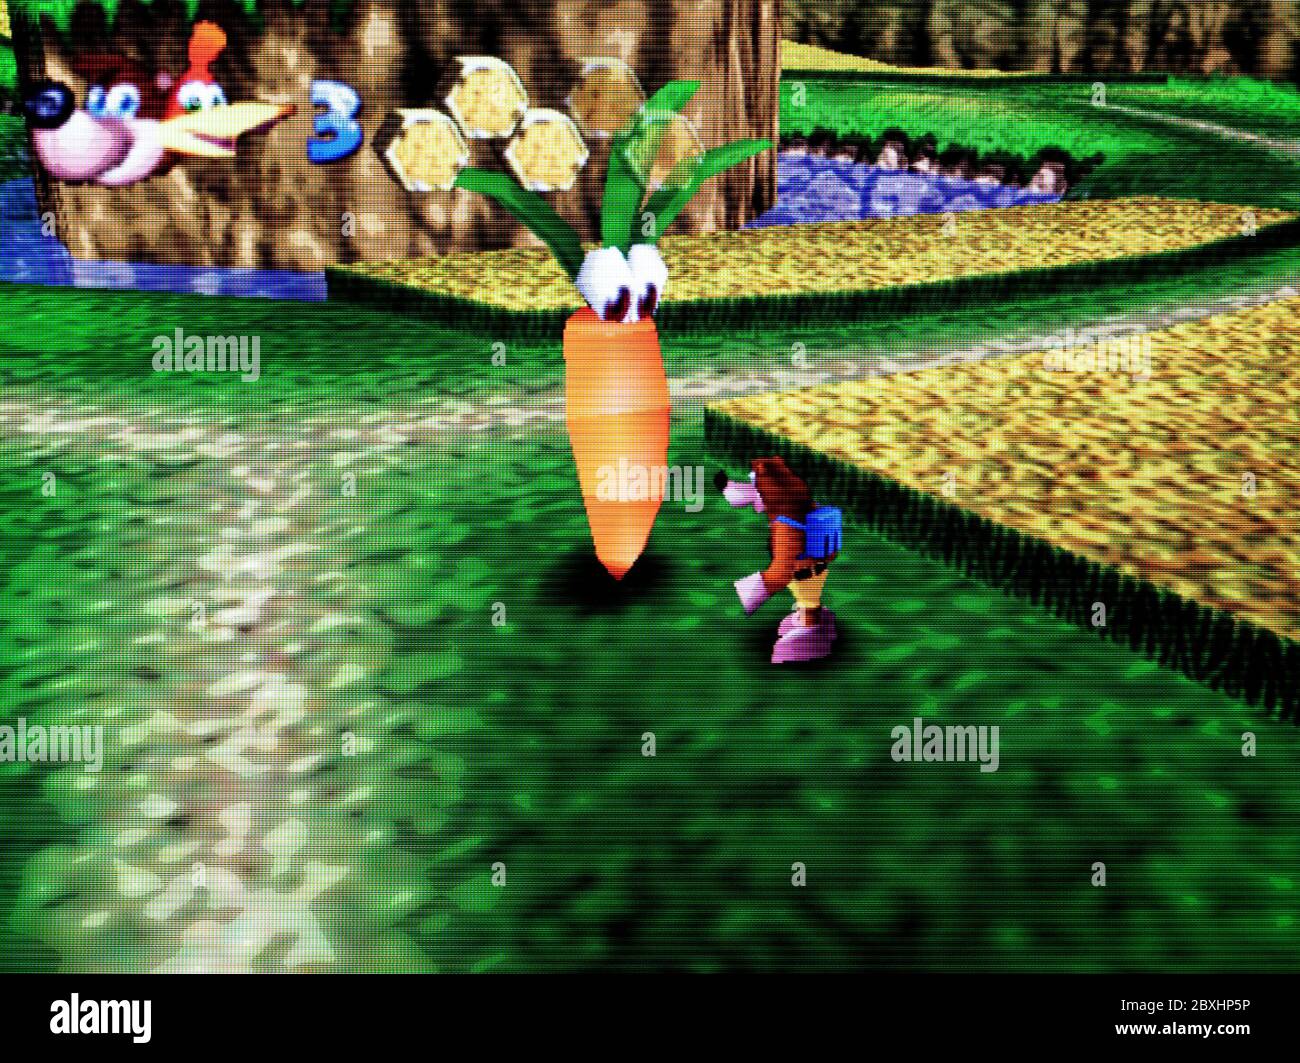 Play Nintendo 64 Banjo-Kazooie Fort Fun V4.0 Online in your